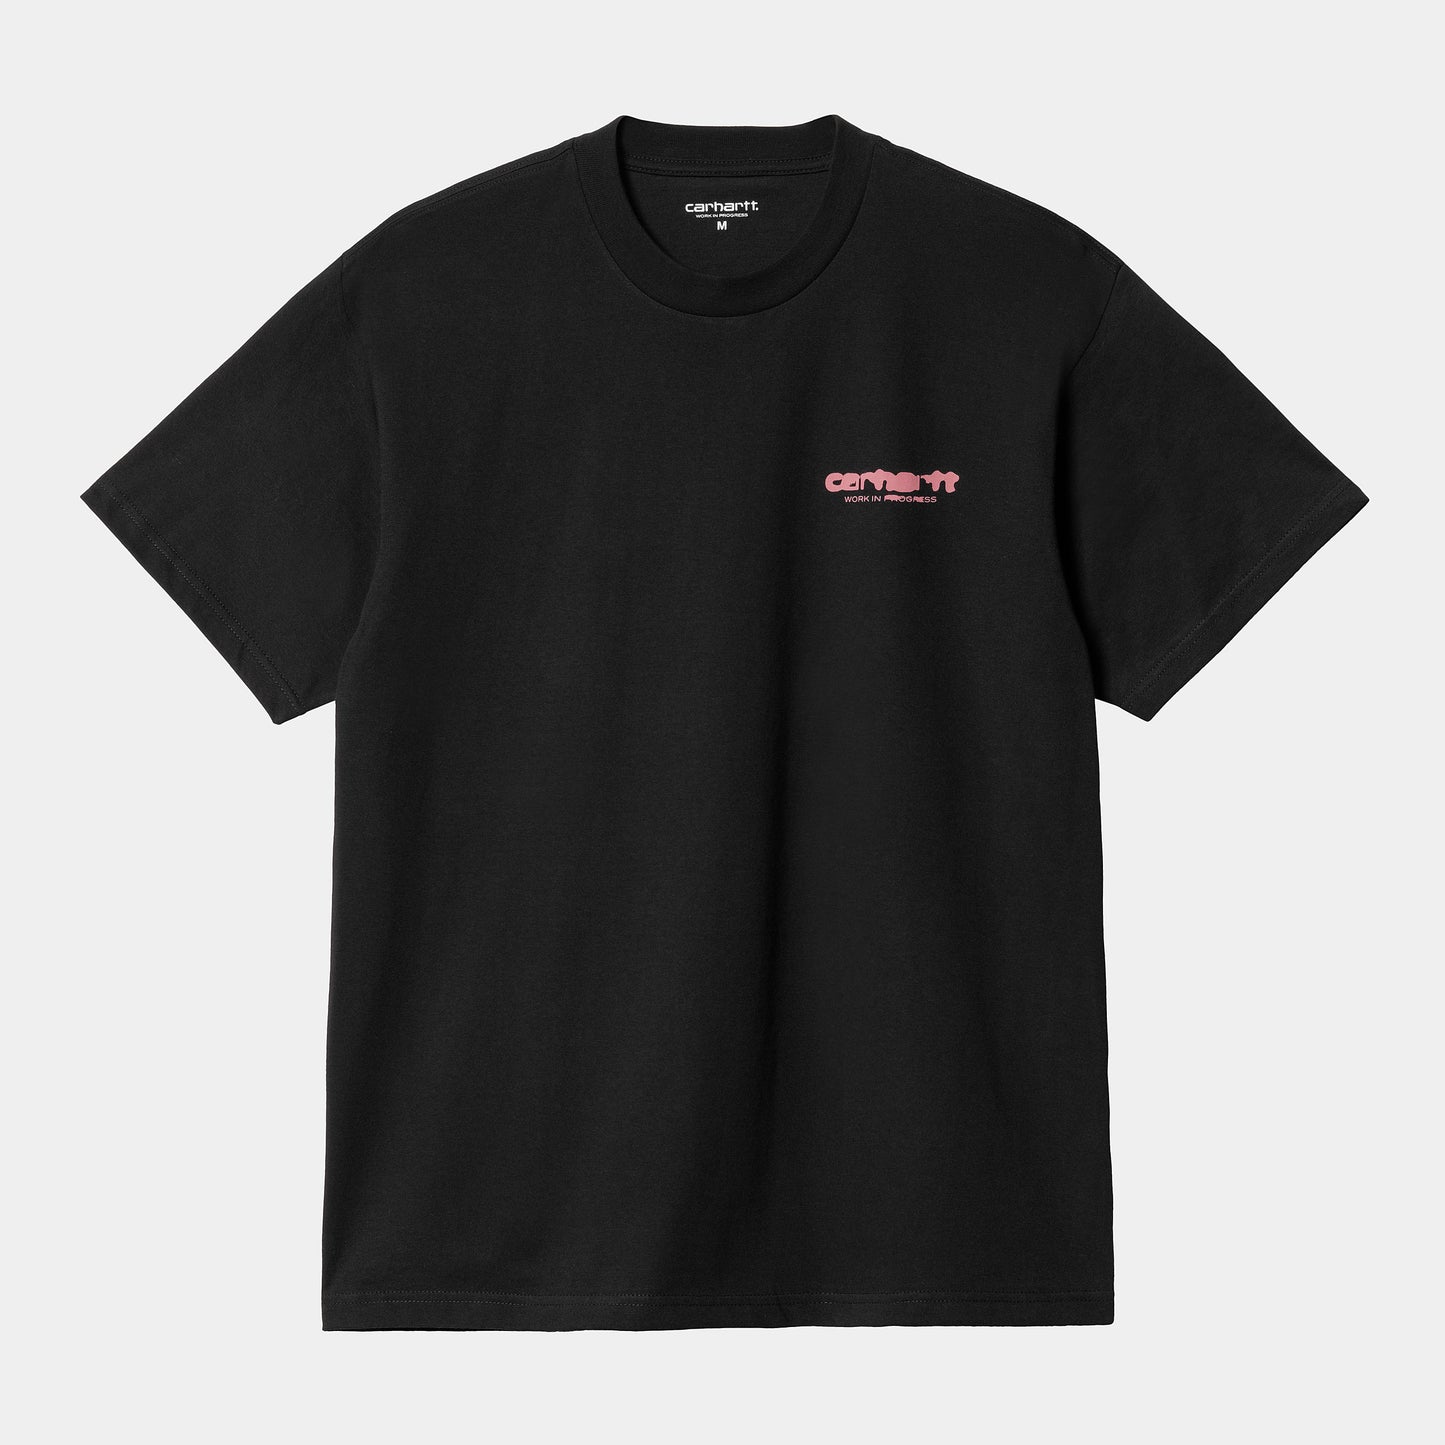 T-Shirt Carhartt Wip Black da Uomo i032878